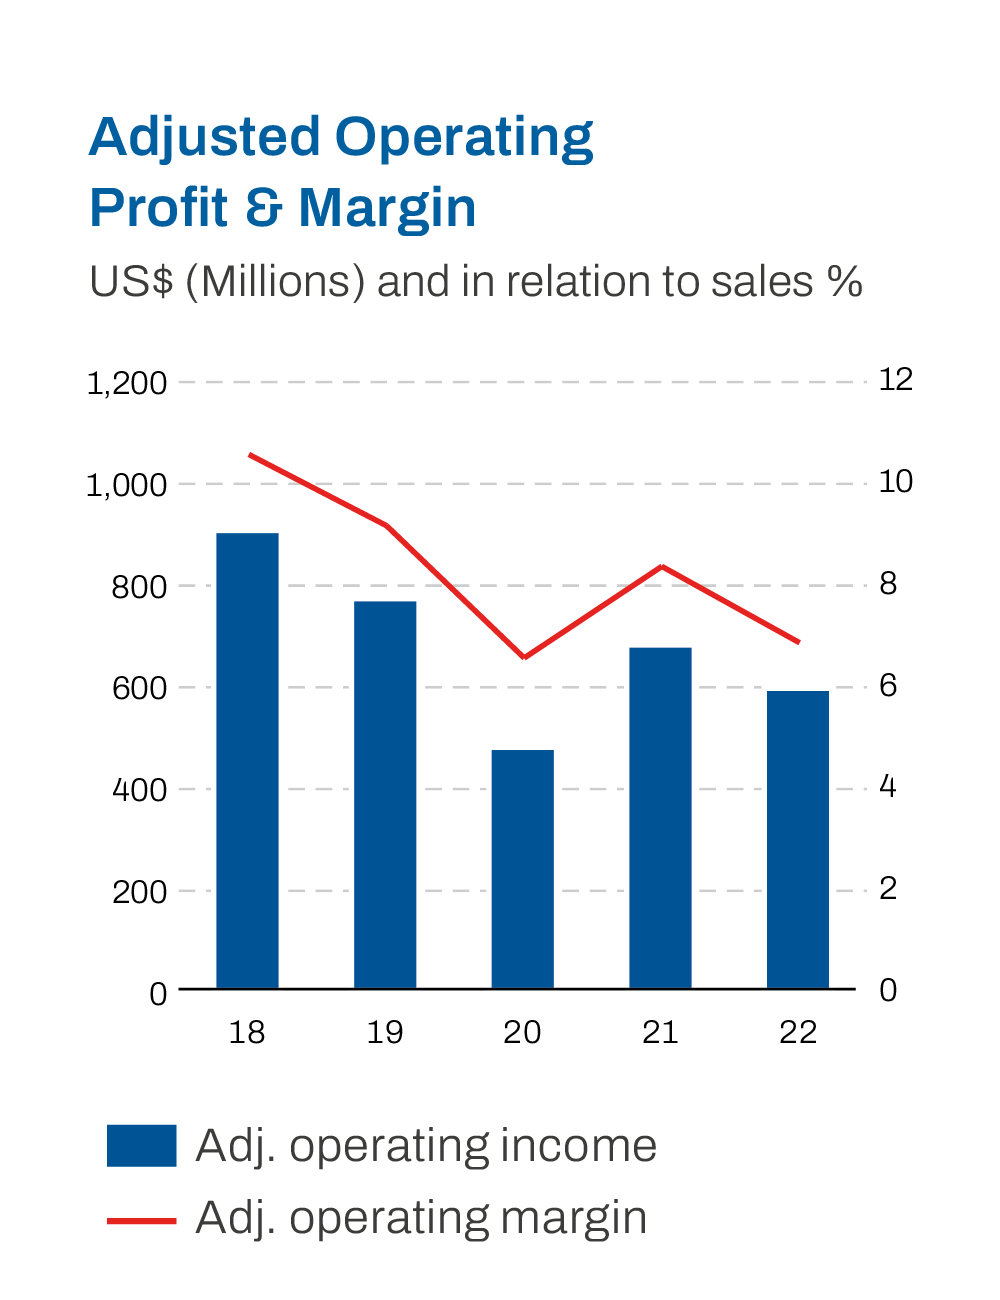 Adjusted operation profit & margin